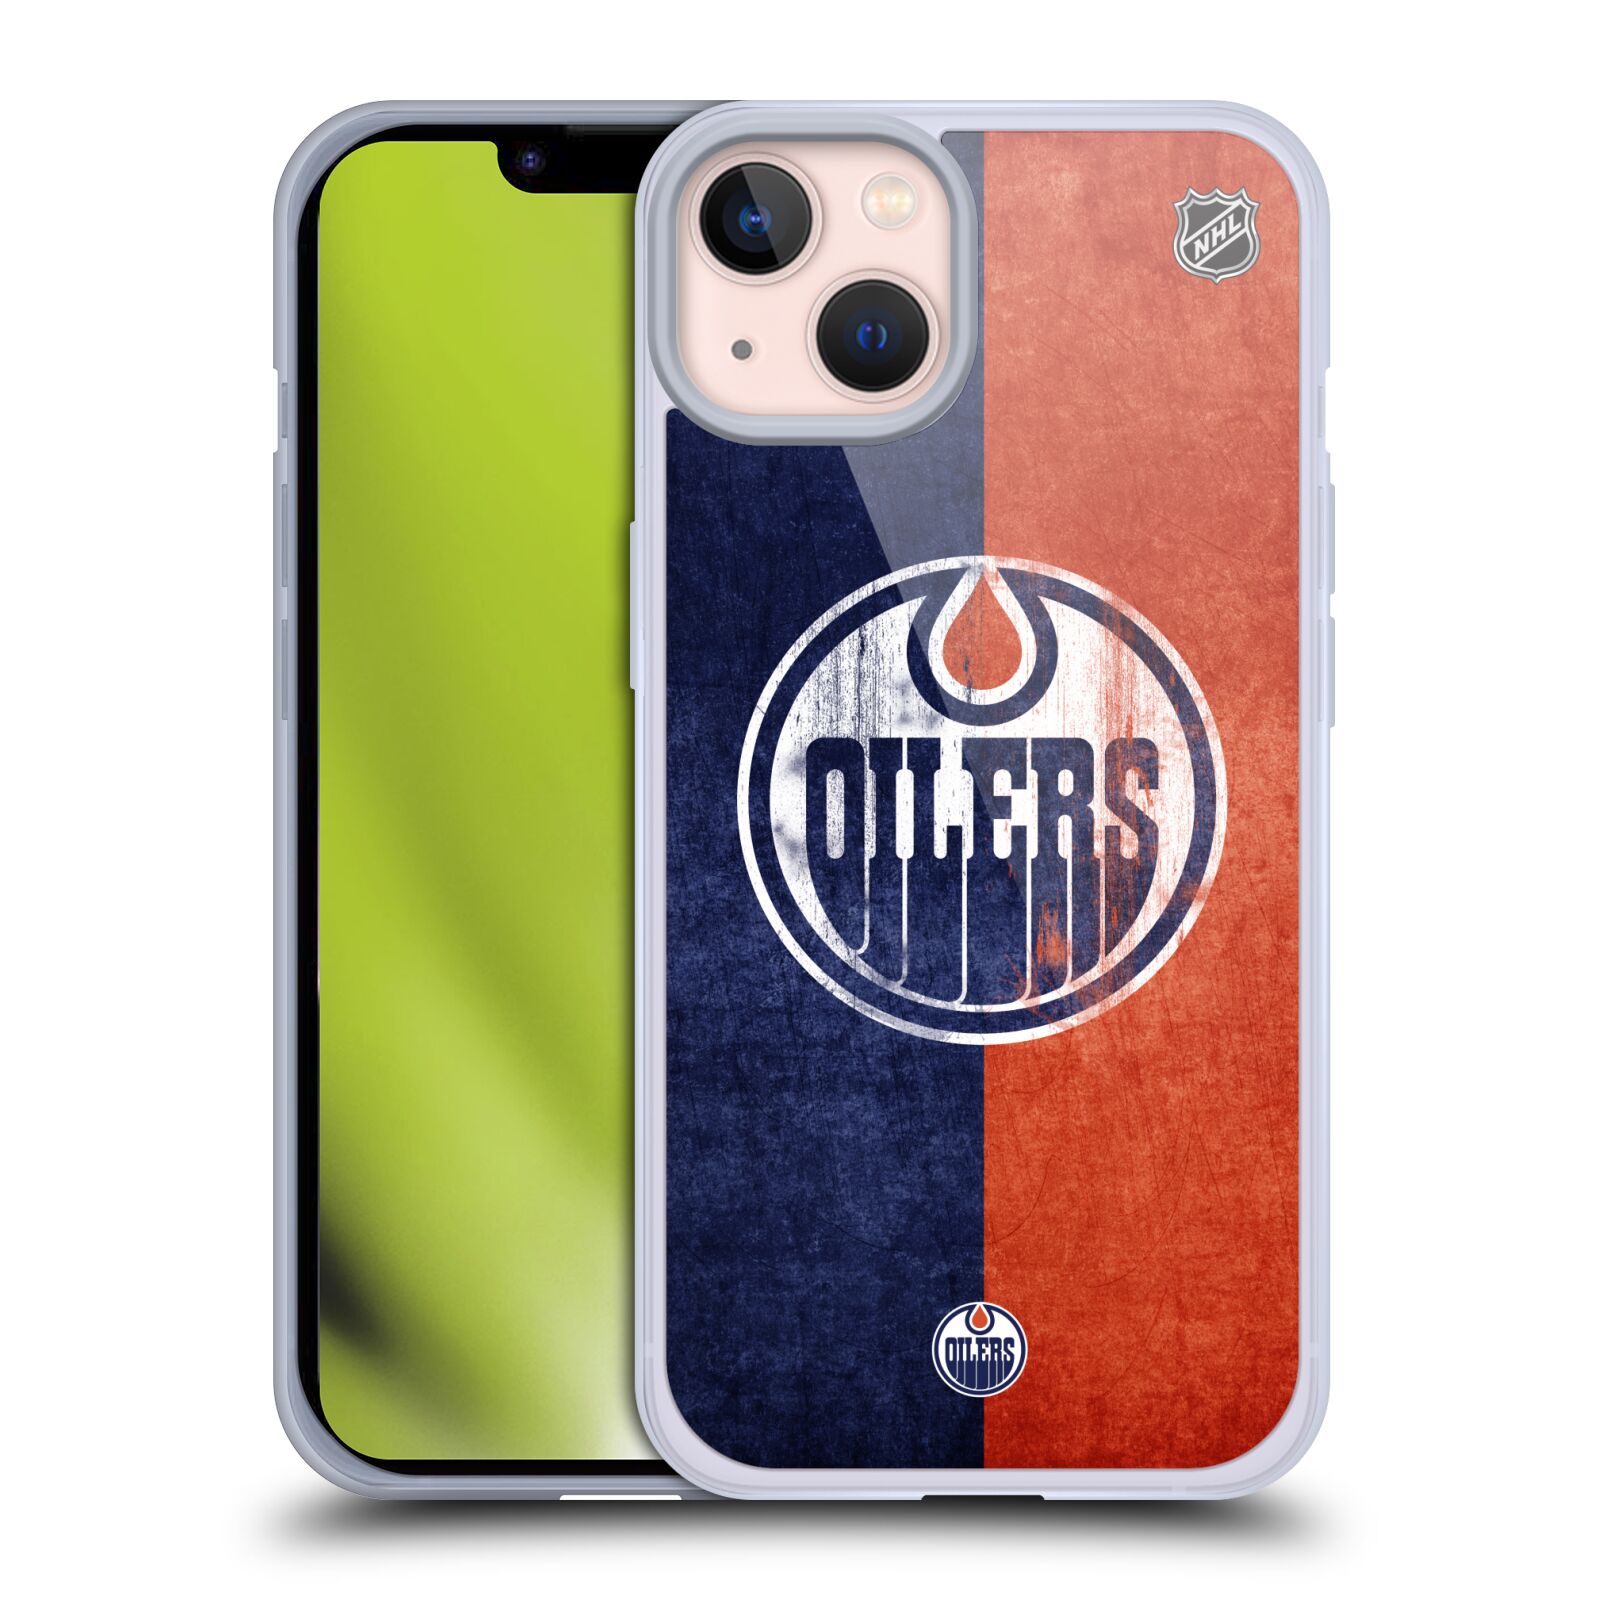 Silikonové pouzdro na mobil Apple iPhone 13 - NHL - Půlené logo Edmonton Oilers (Silikonový kryt, obal, pouzdro na mobilní telefon Apple iPhone 13 s licencovaným motivem NHL - Půlené logo Edmonton Oilers)